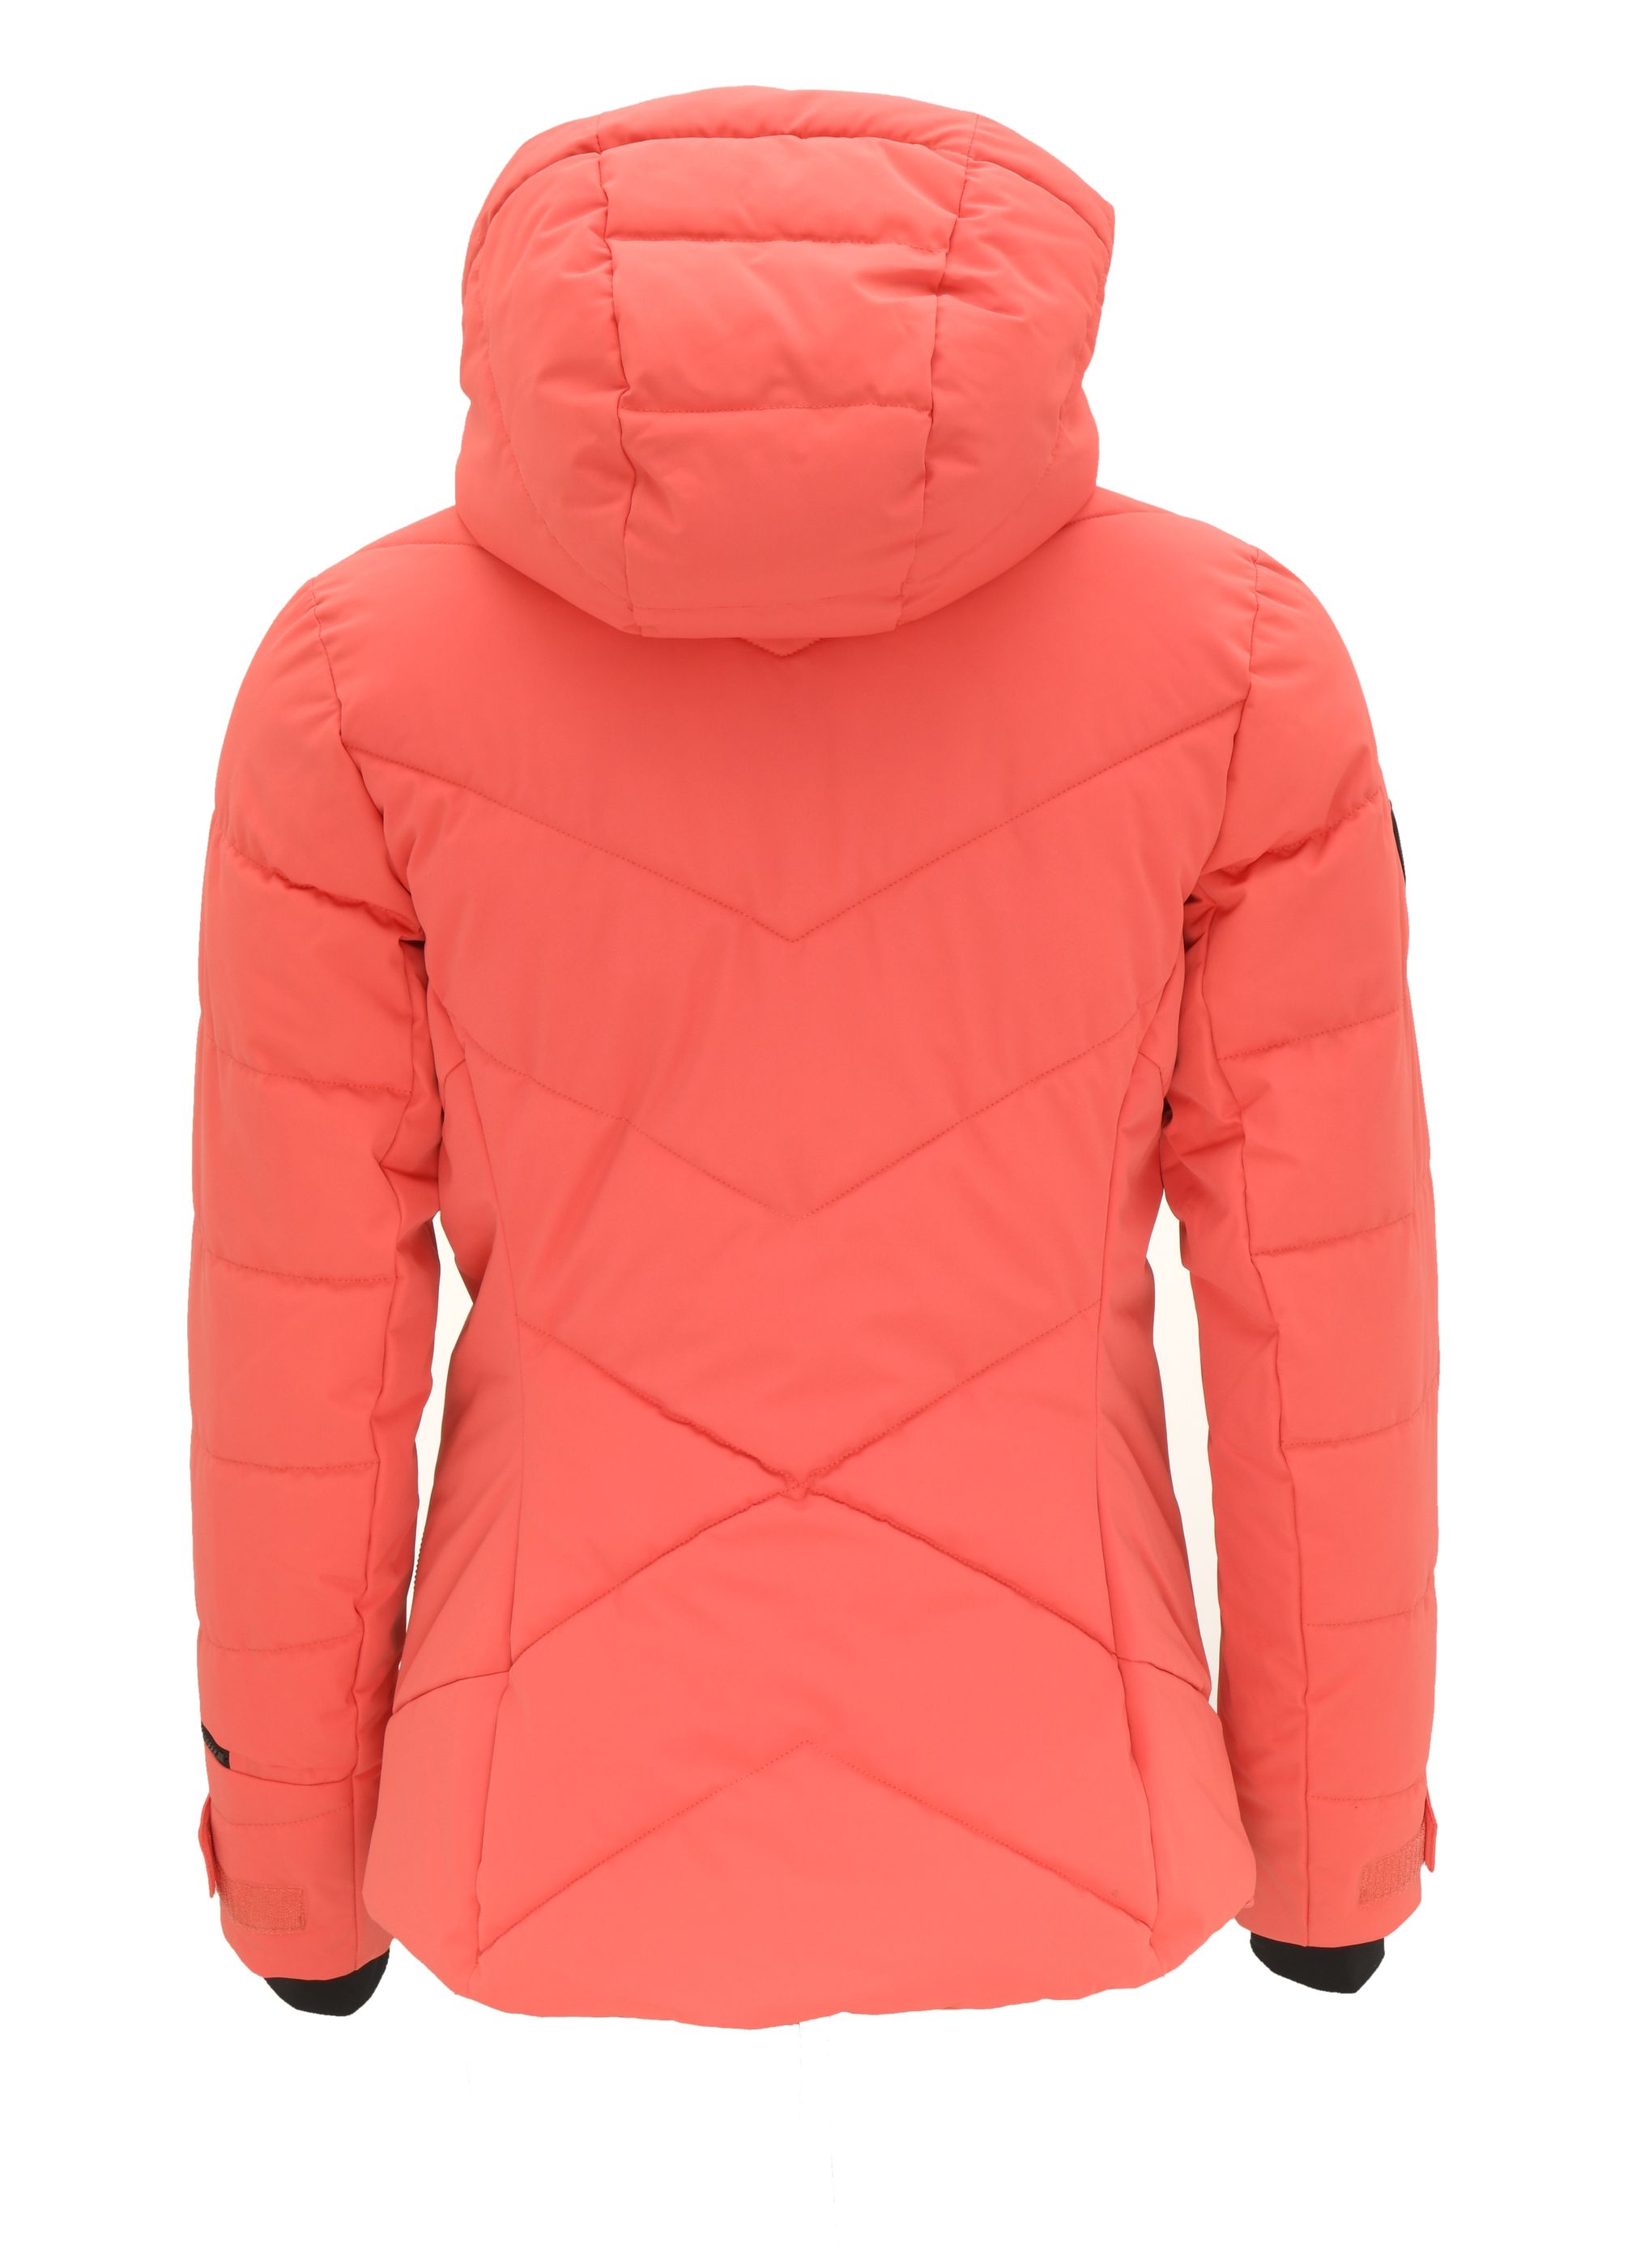 W2W Ski Jacket Veneto, hot coral